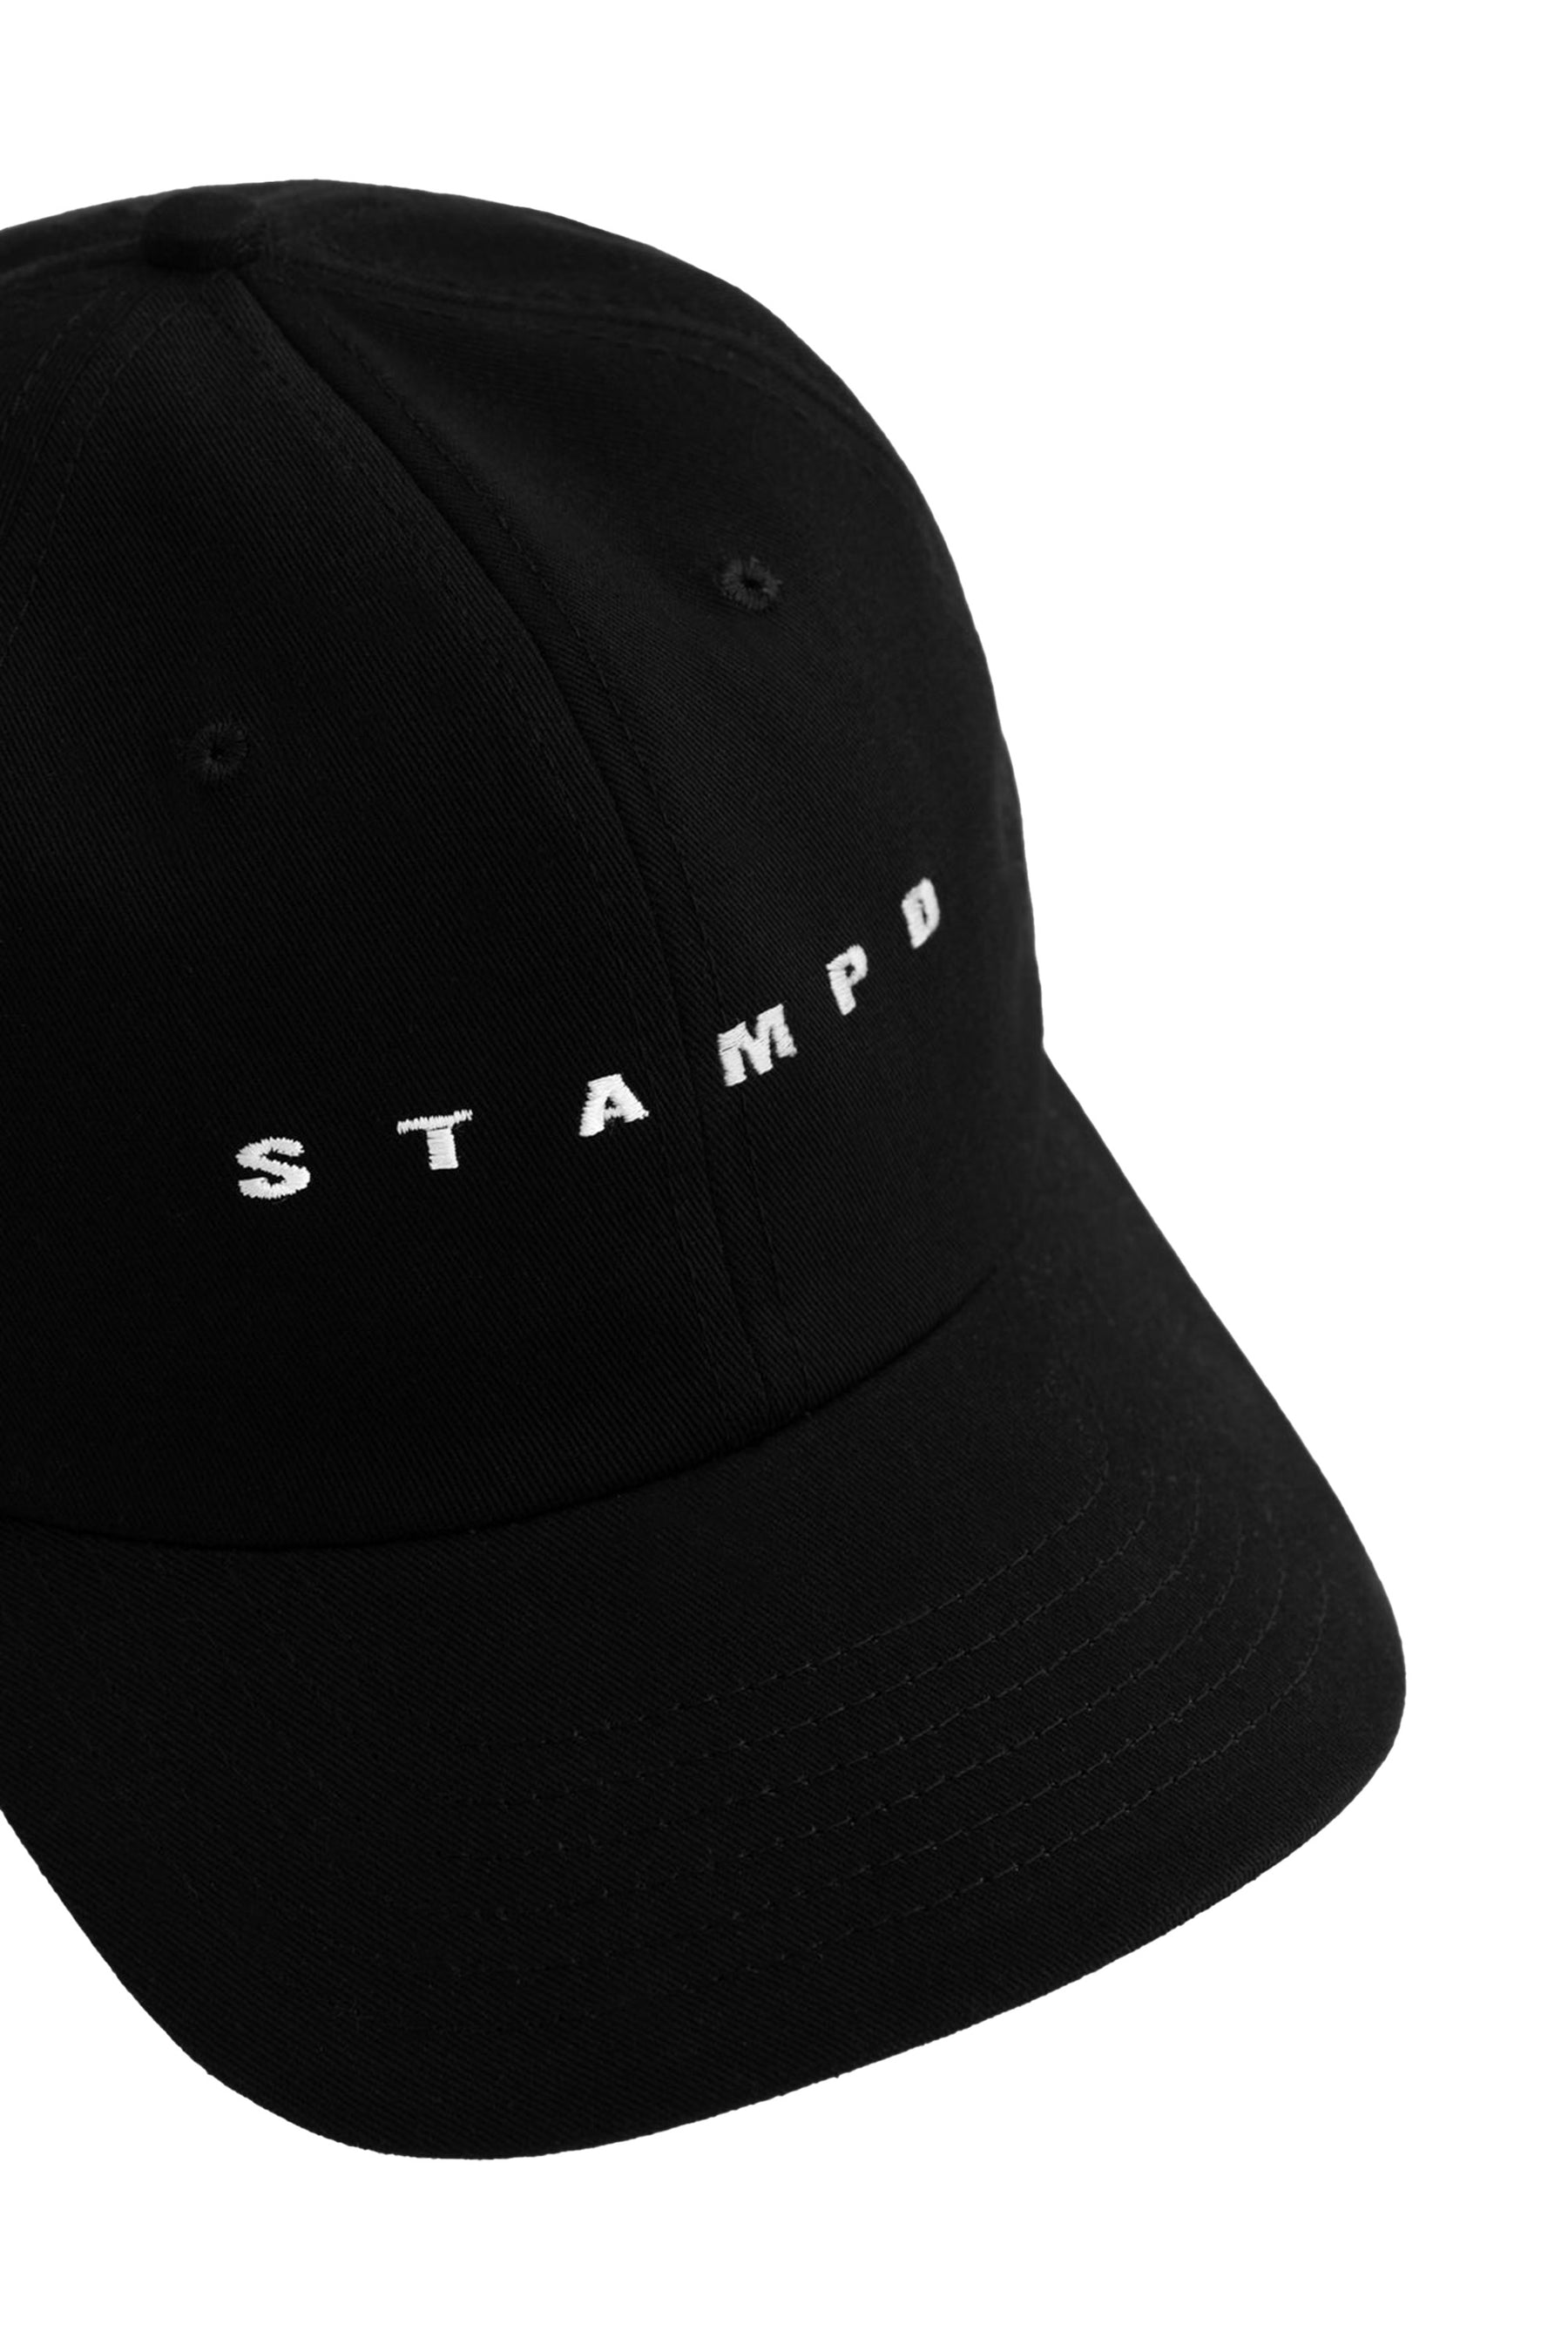 STAMPD スタンプド FW23 STRIKE LOGO SPORTS CAP / BLK -NUBIAN